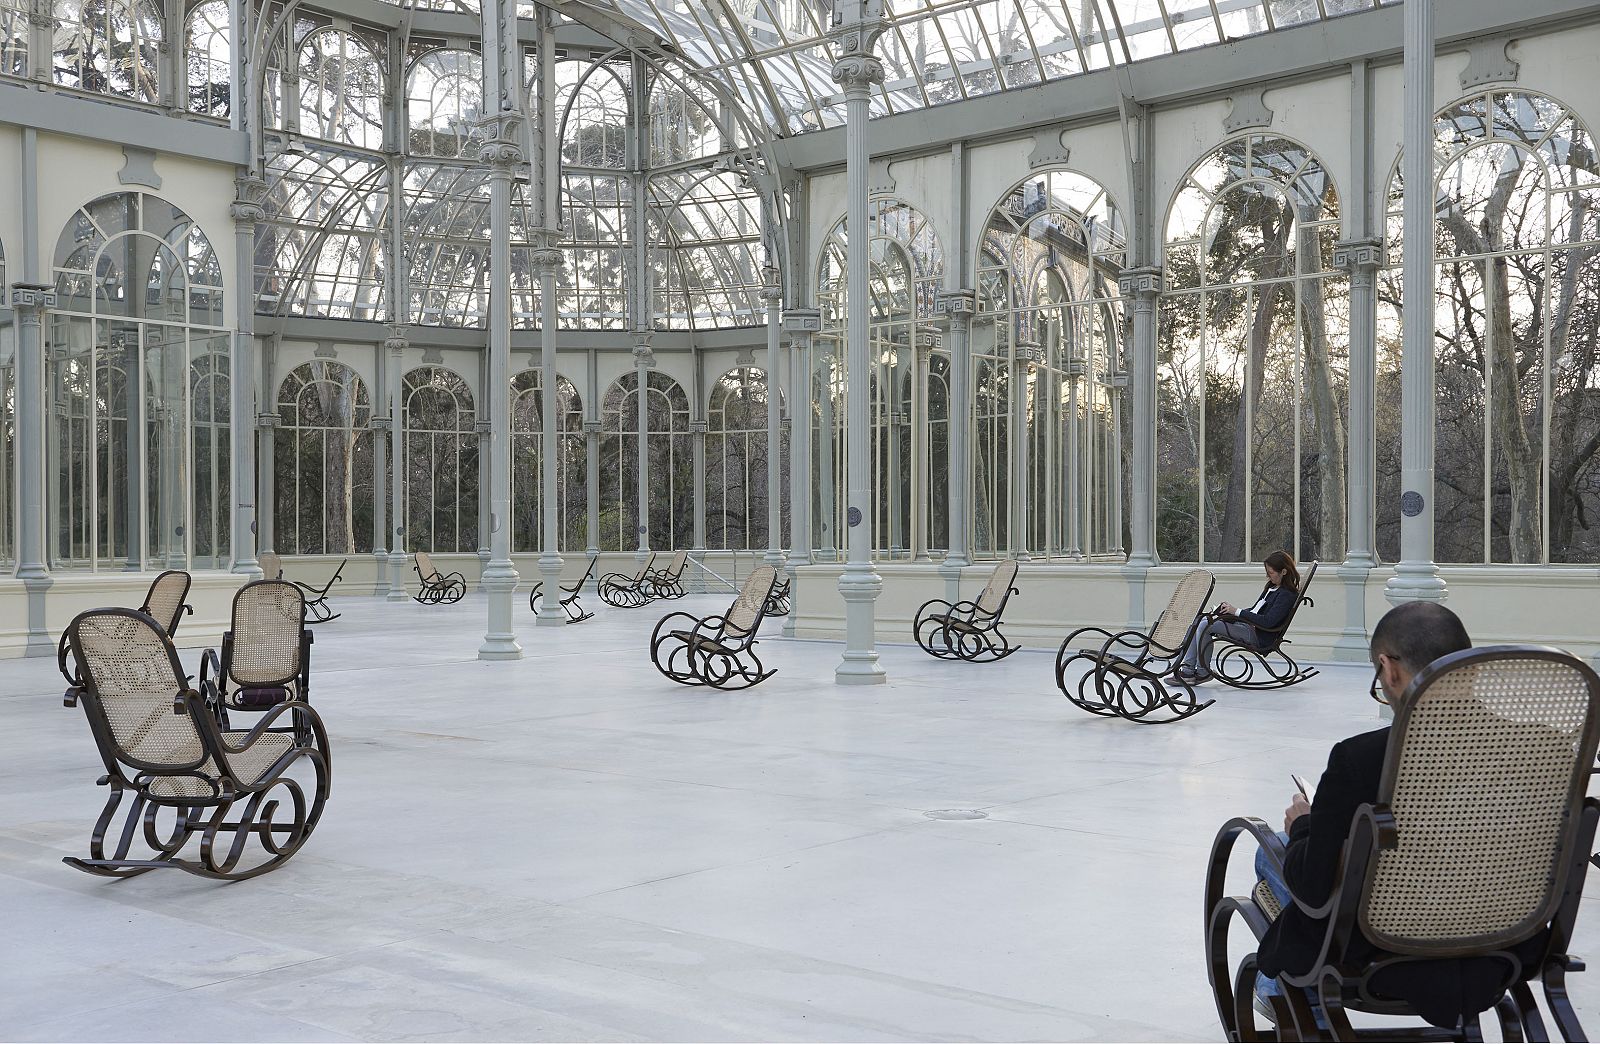 Vista de la muestra 'Splendide Hotel' en el Palacio de Cristal del Retiro, obra de la artista Dominique Gonzalez-Foerster.